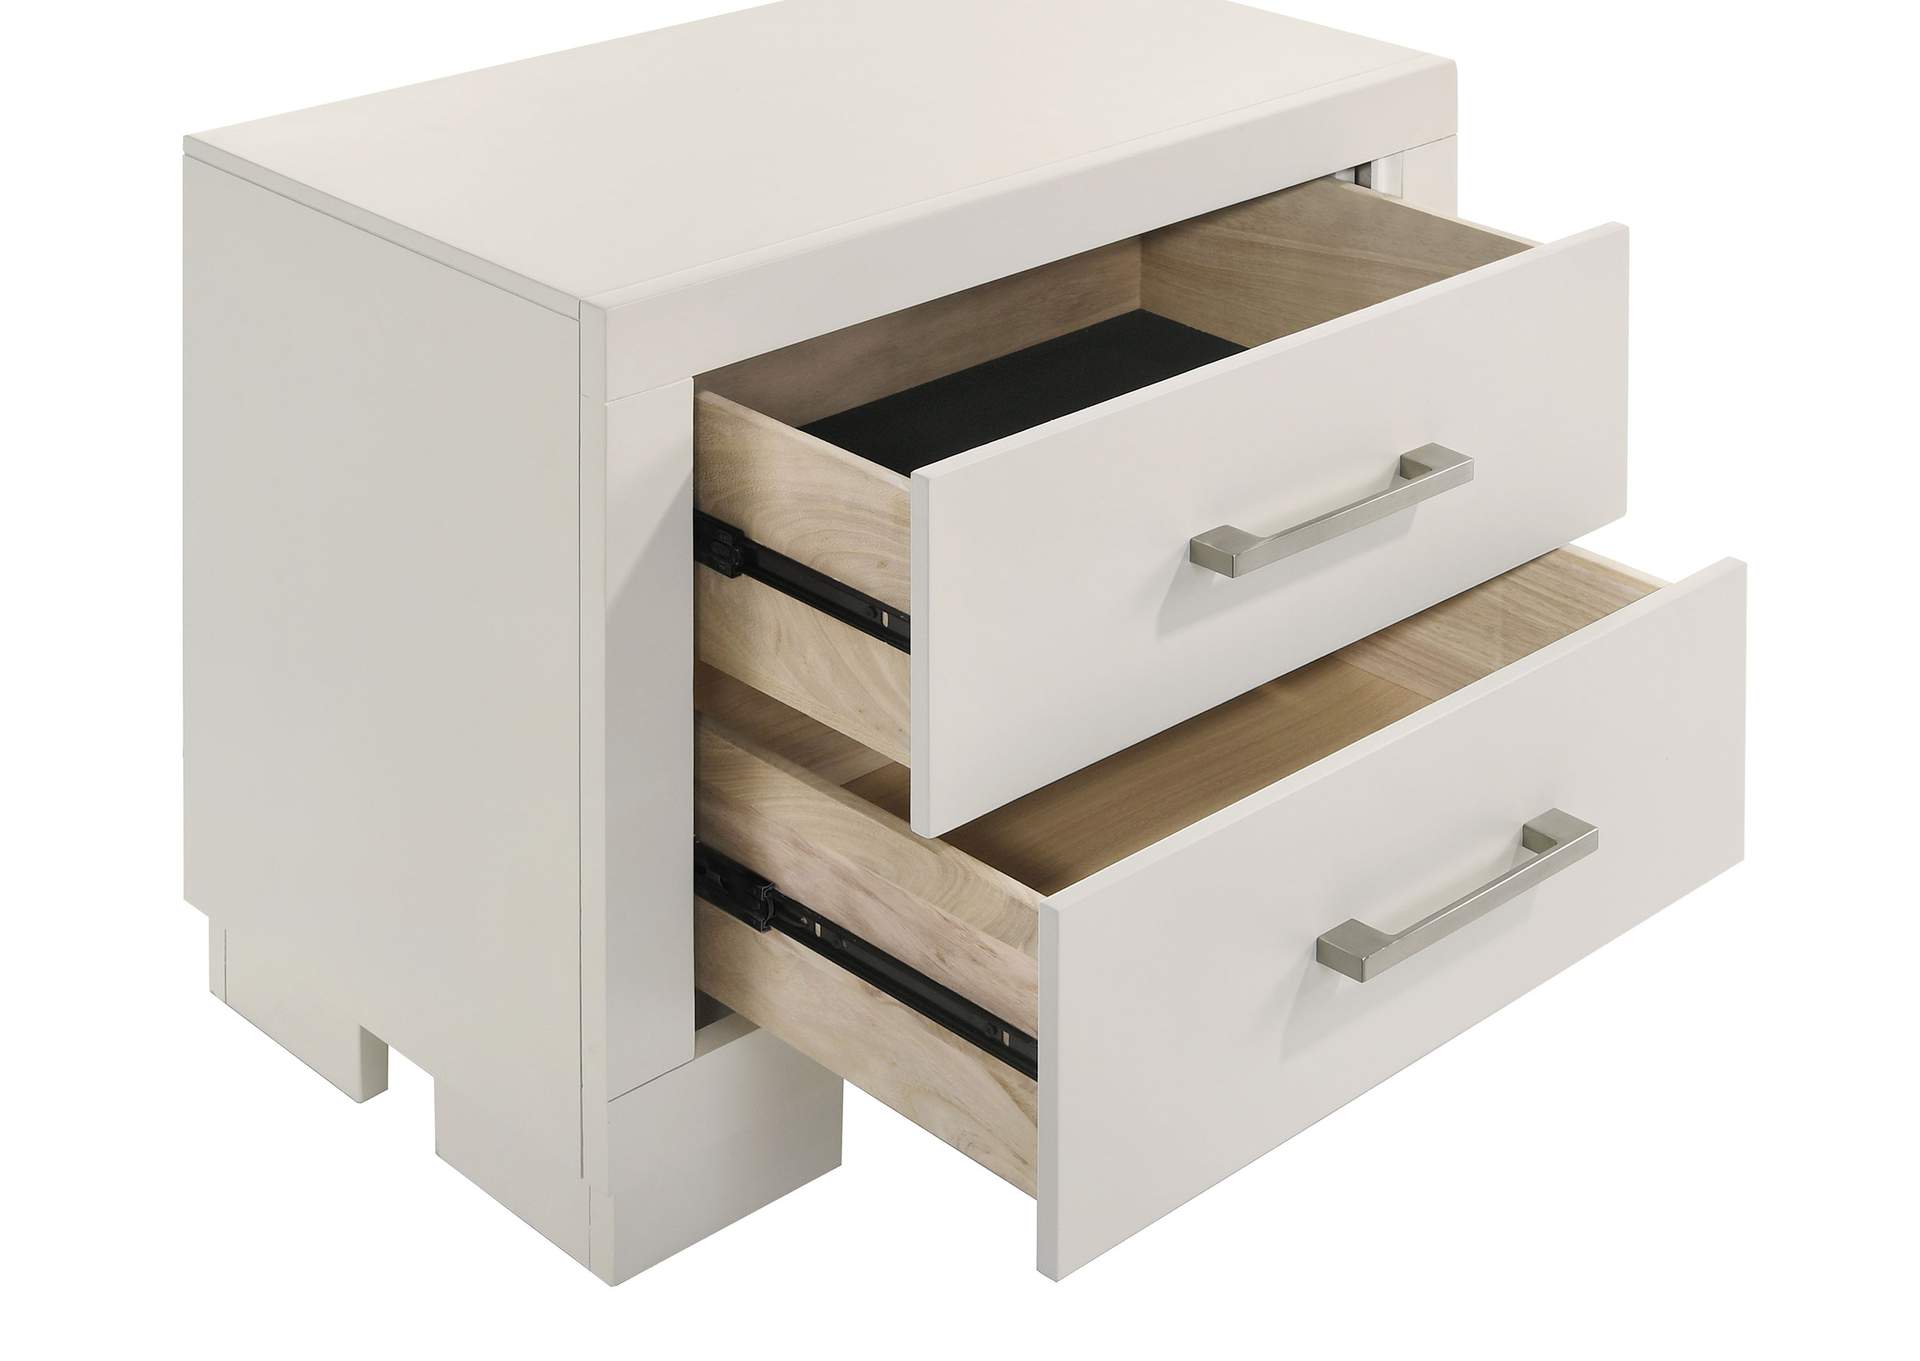 Jessica 2-drawer Nightstand White,Coaster Furniture